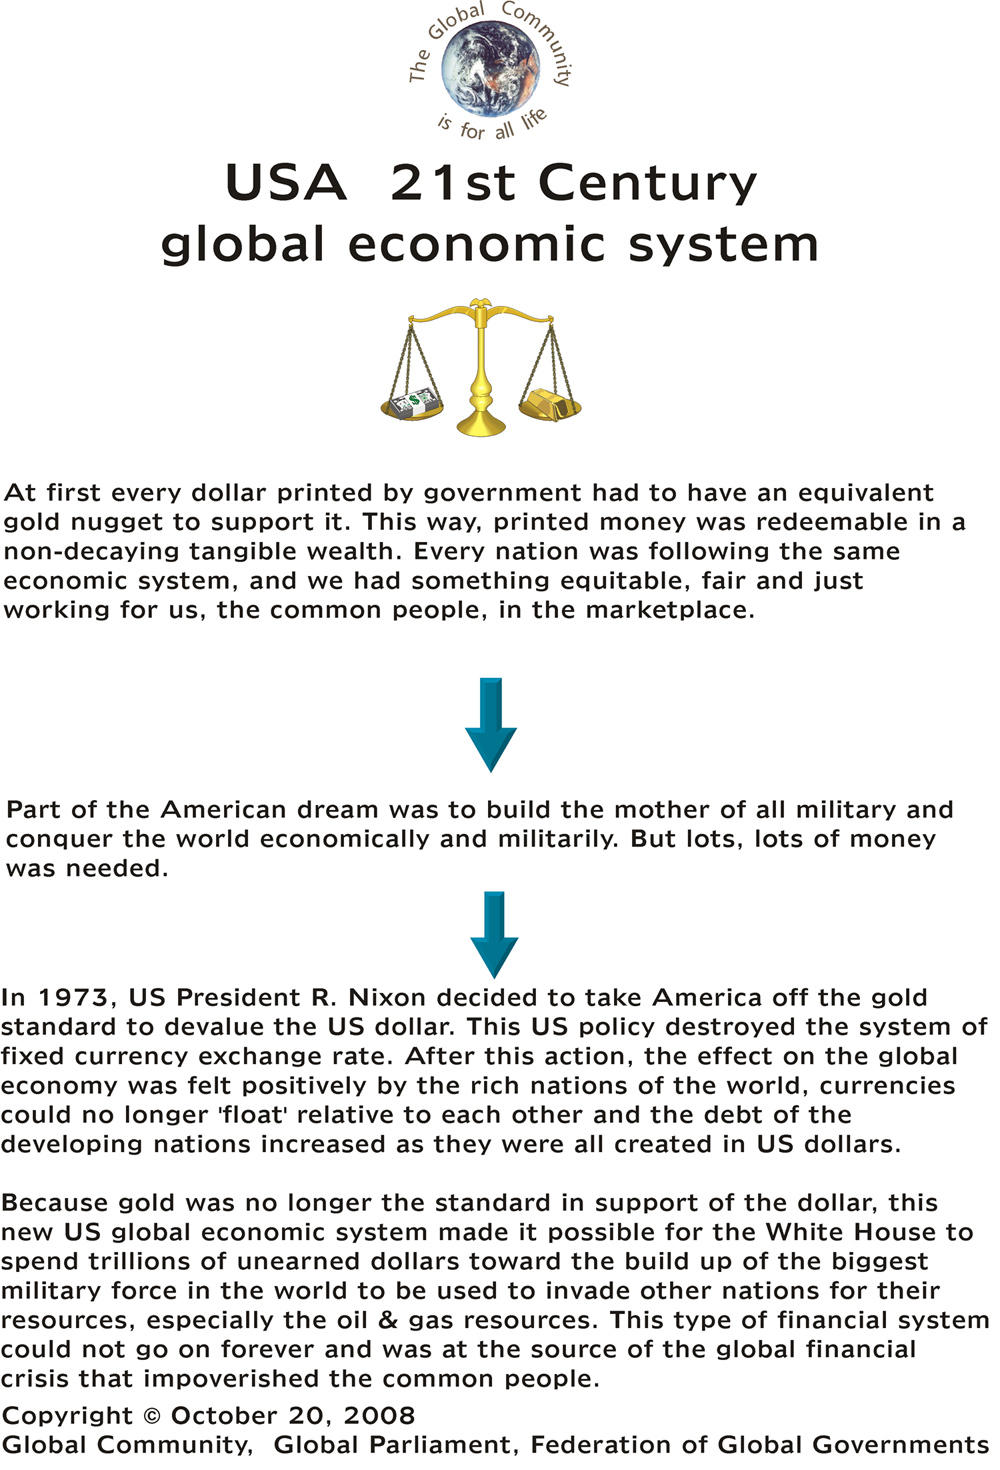  USA 21st century global economic system 